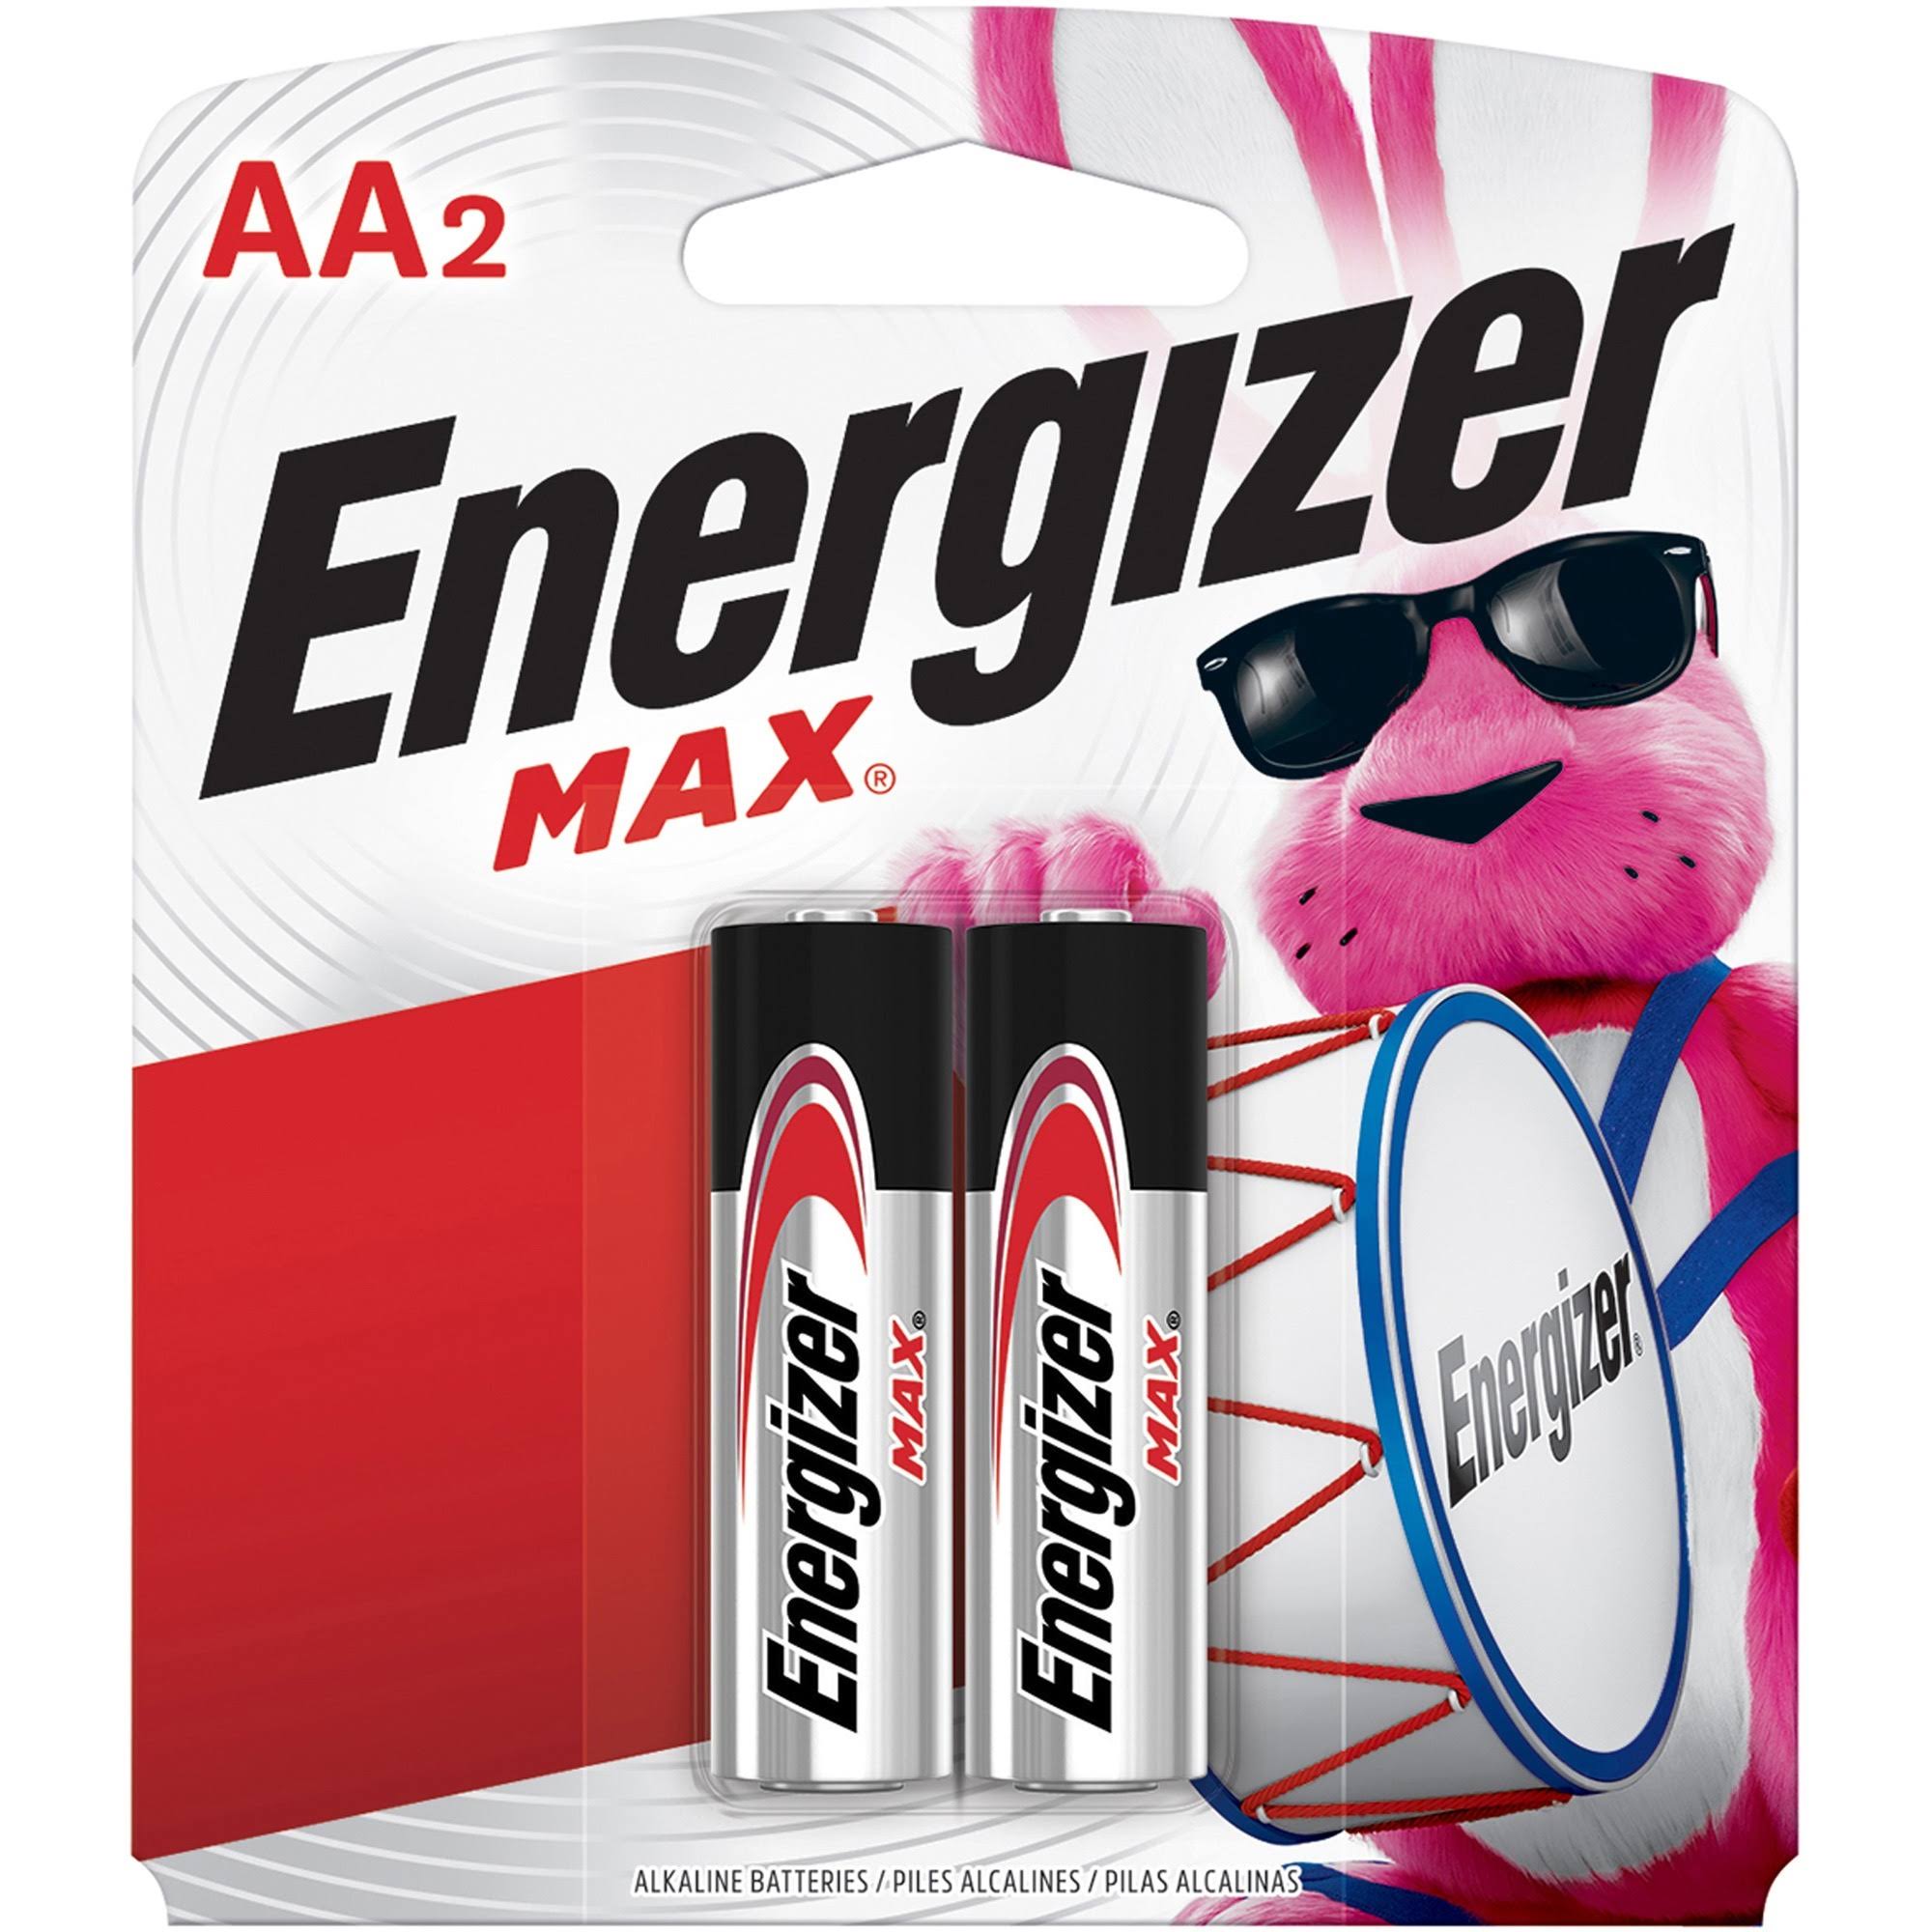 Energizer Max AA Alkaline Batteries - 2 Pack